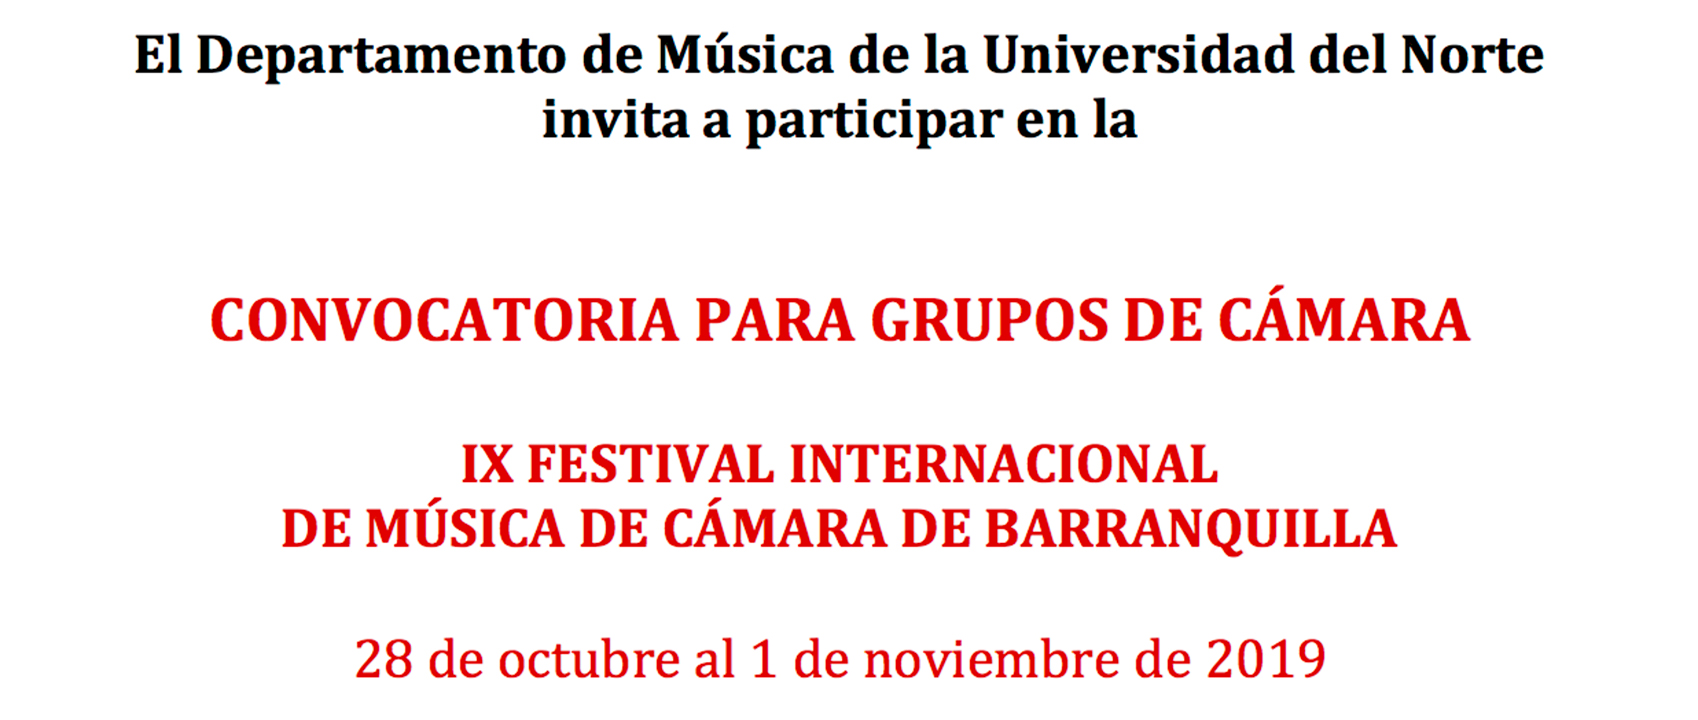 Convocatoria: IX Festival Internacional de Música de Cámara de Barranquilla